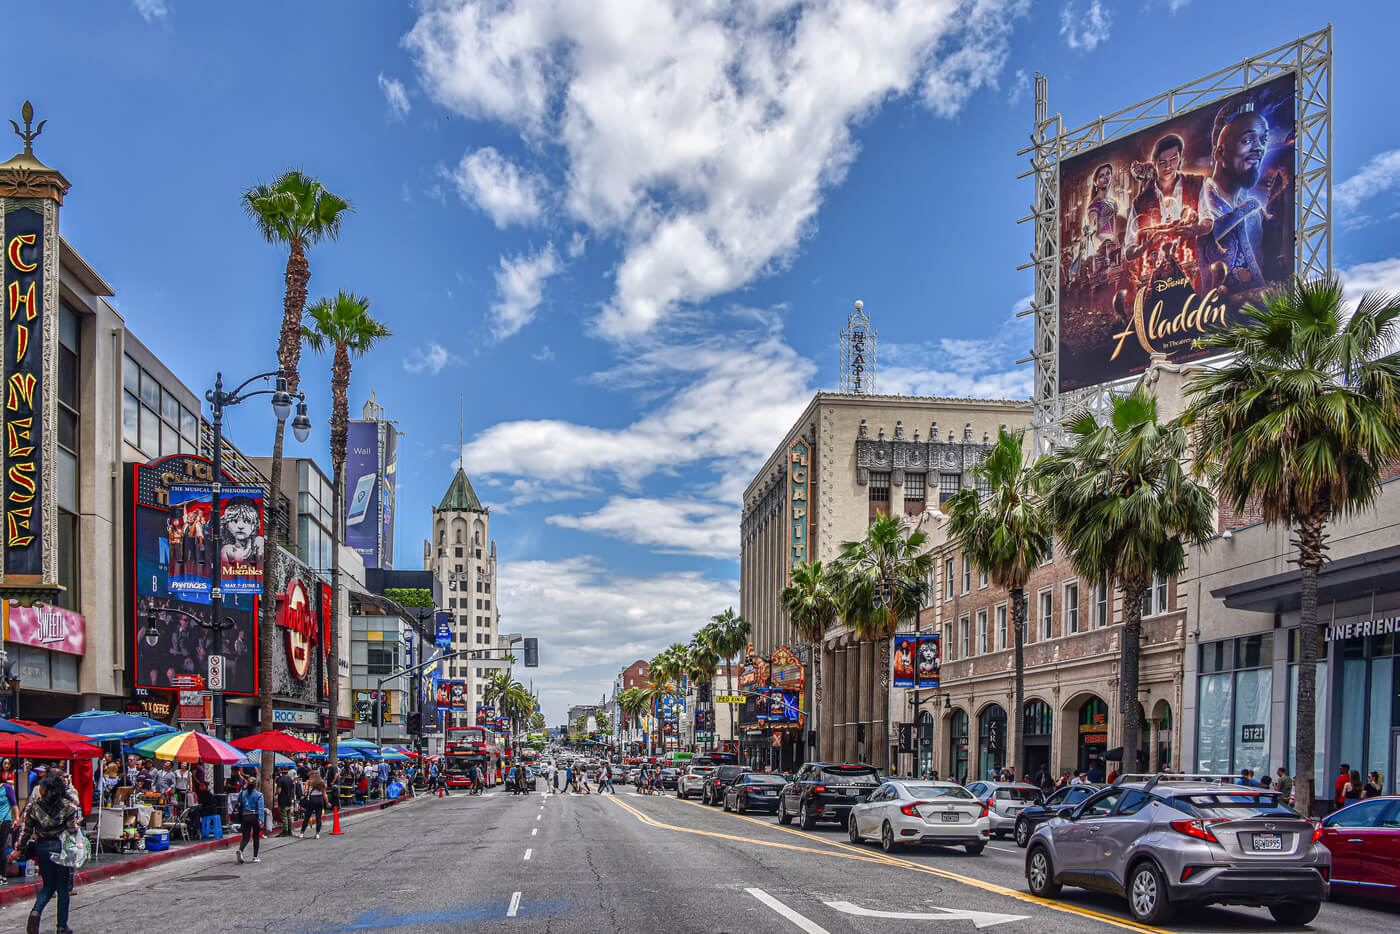 Голливуд это город. Бульвар Голливуд в Лос-Анджелесе. Лос Анджелес бульвар Голливуд. Лос Анджелес улицы Голливуда. Улицы Лос Анджелеса Голливуд.